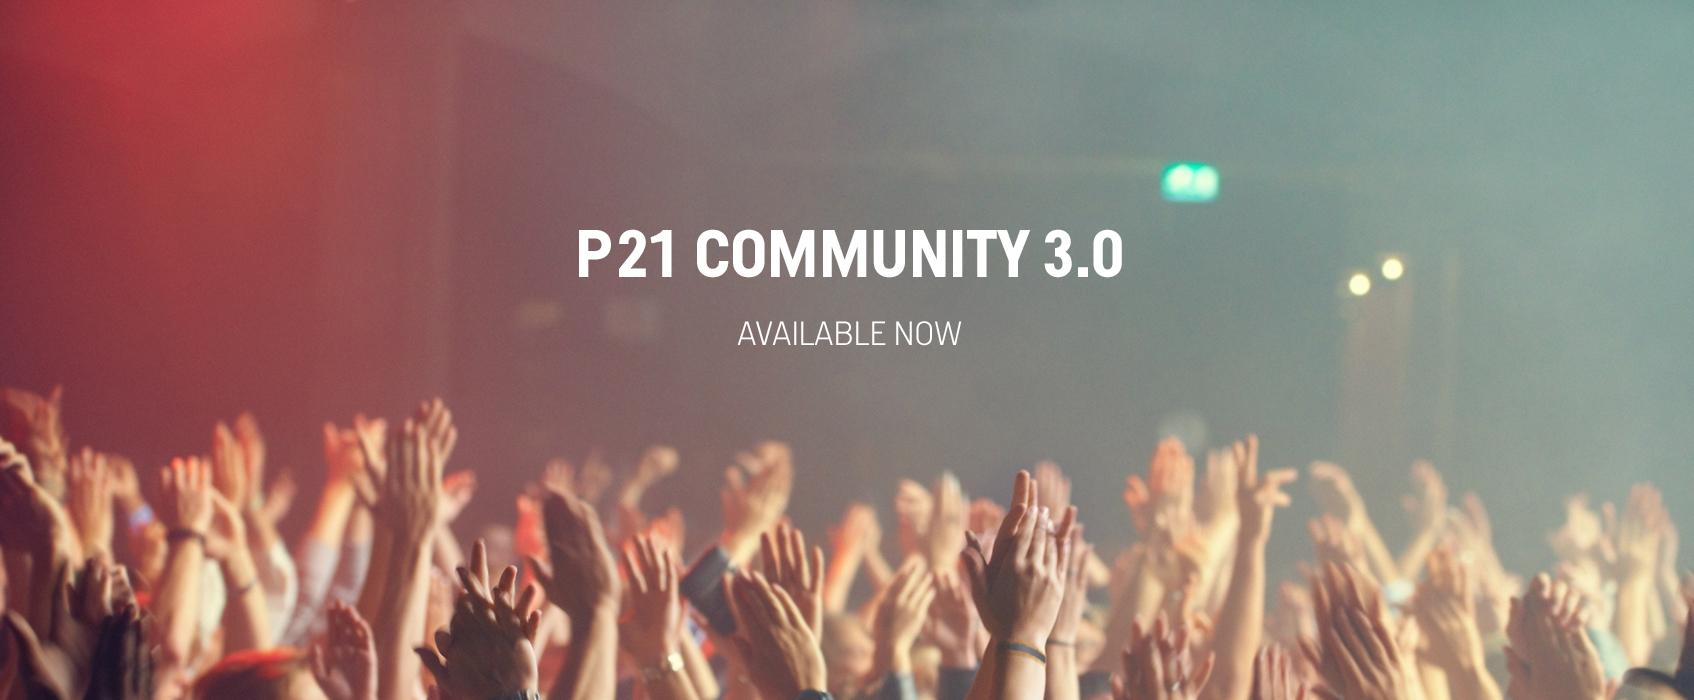 P21 Community 3.0